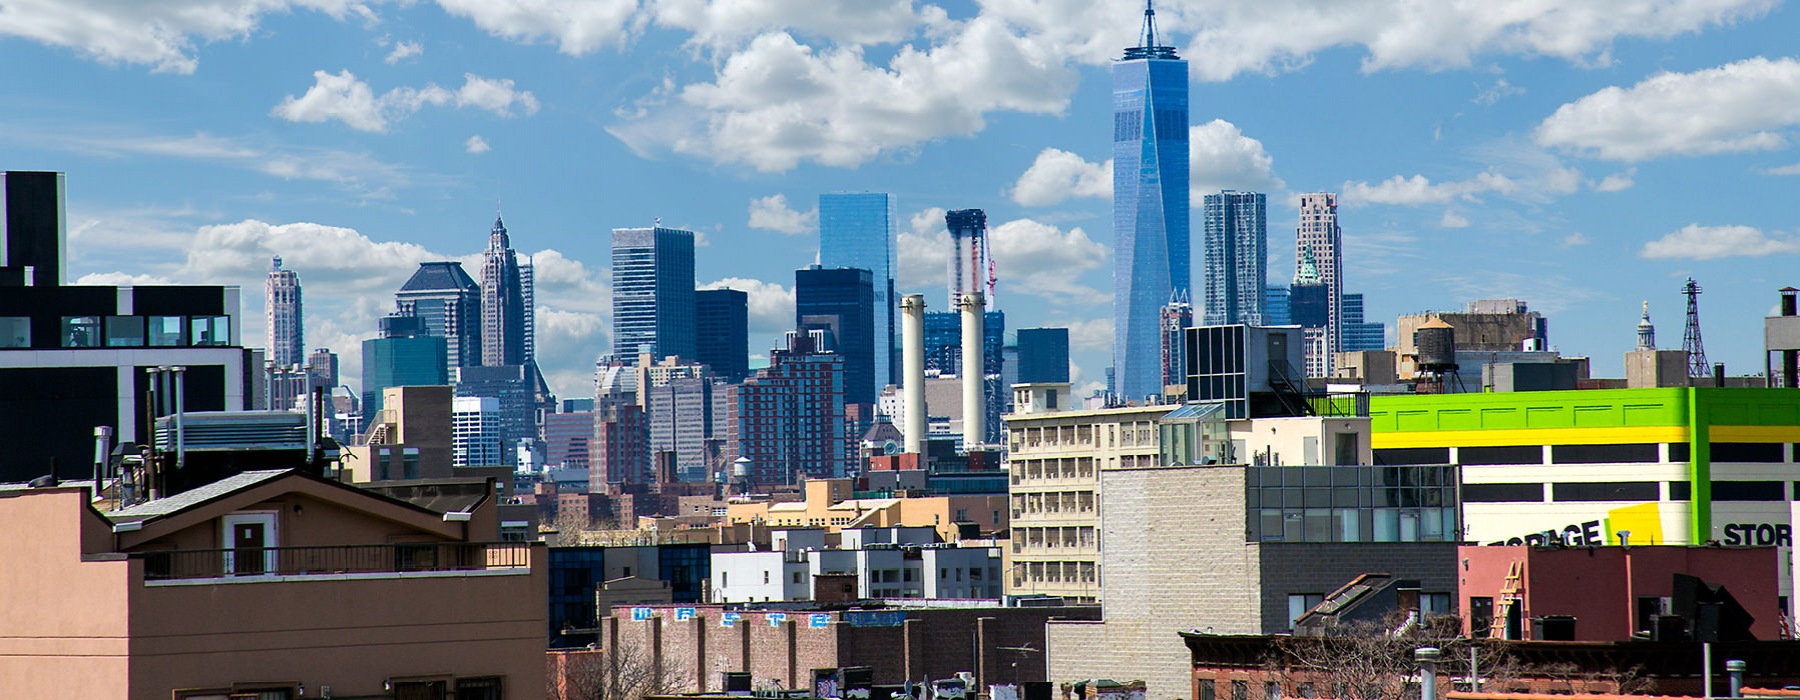 Skyline view of Brooklyn